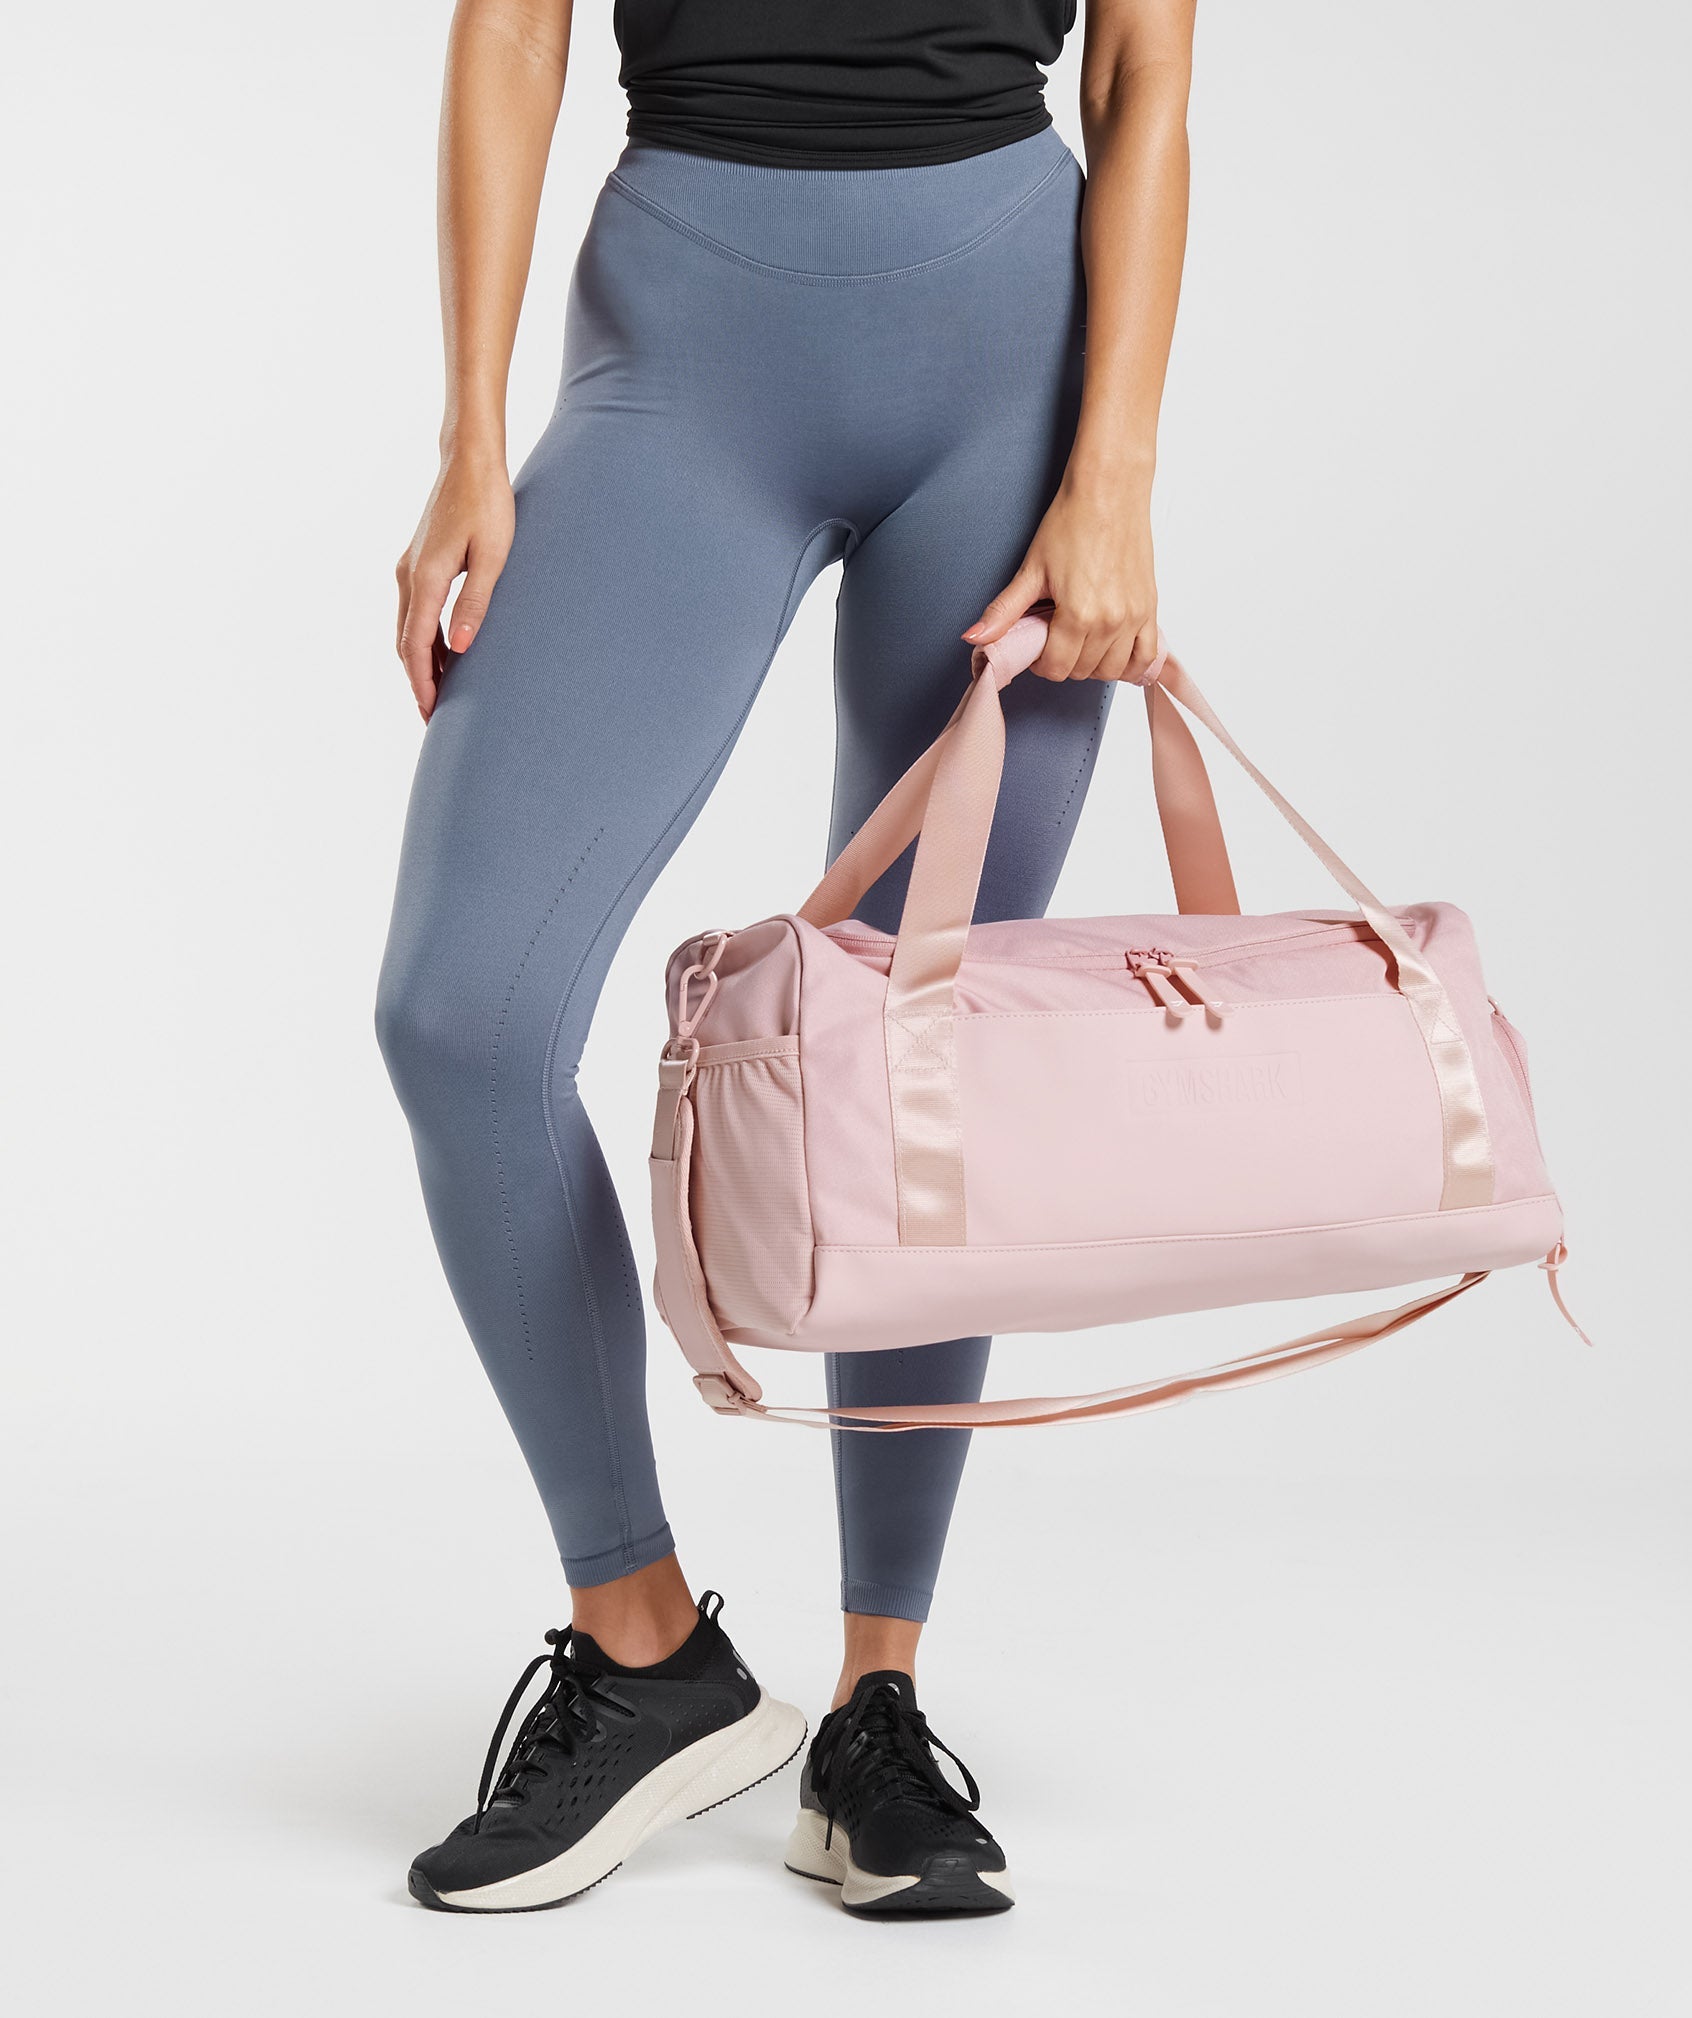 Gymshark Small Everyday Gym Bag - Scandi Pink